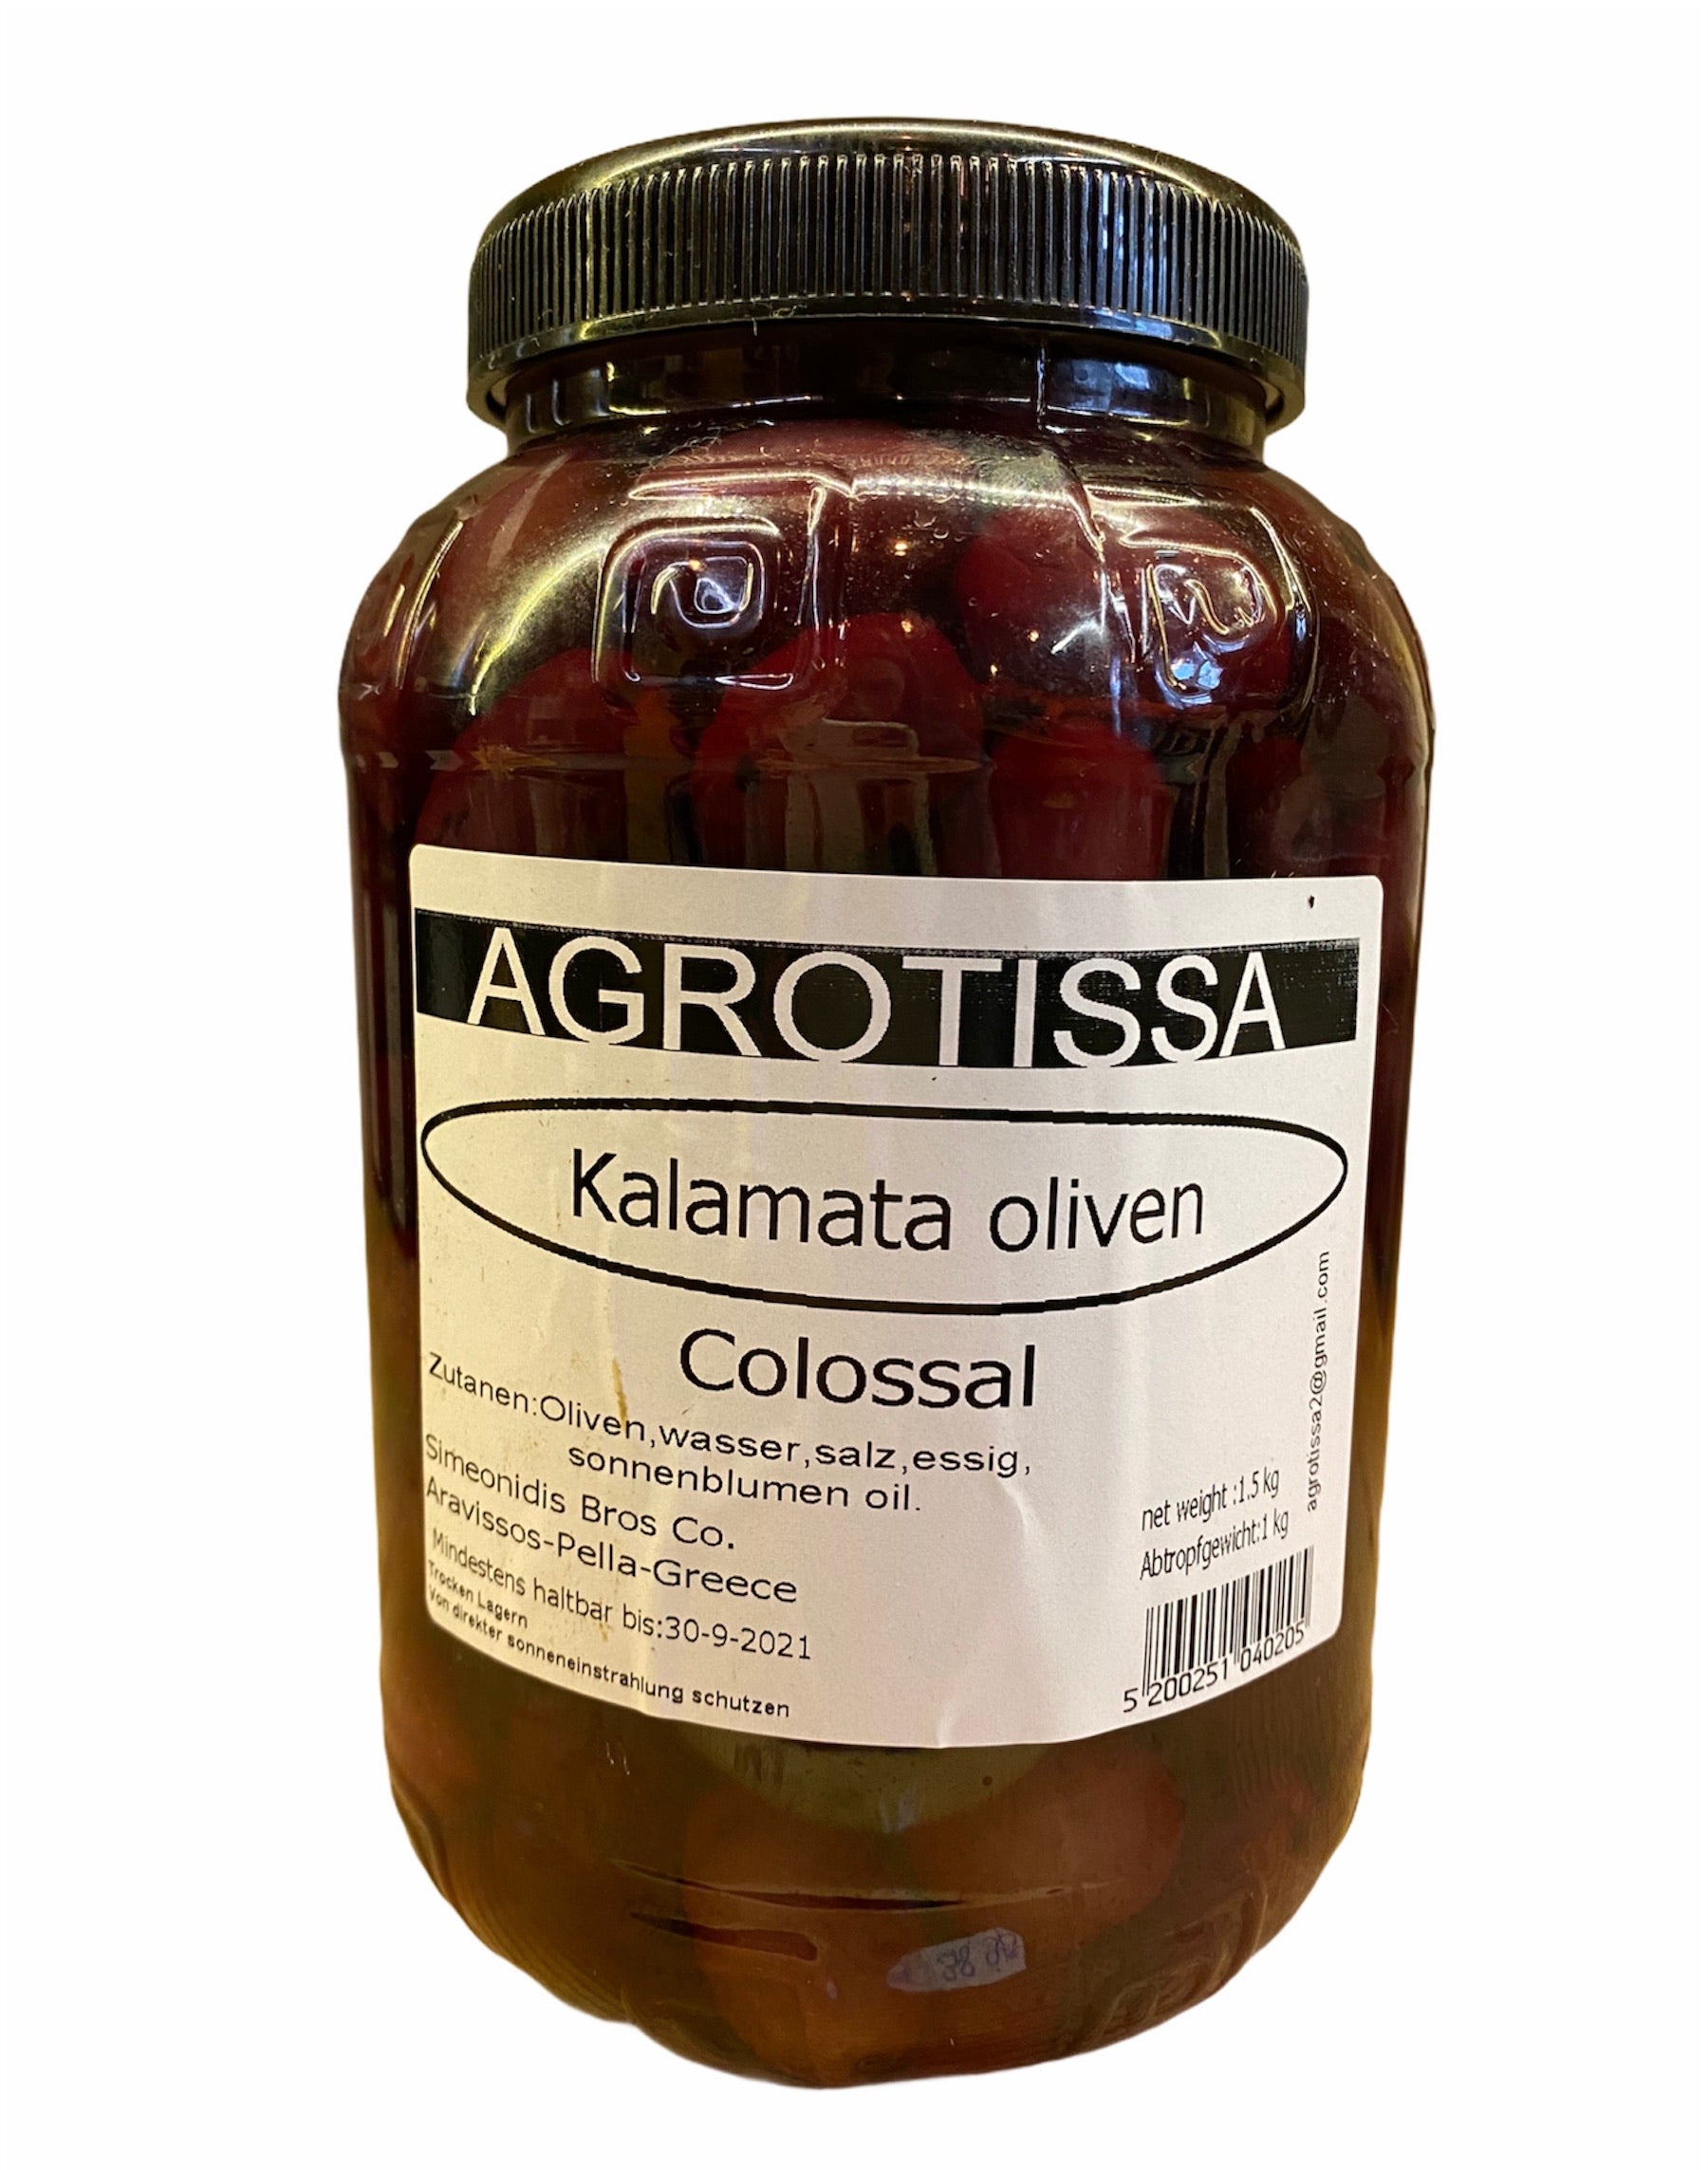 Agrotissa Kalamata Kalamon Oliven Olives Greek Giants / Colossal 1kg